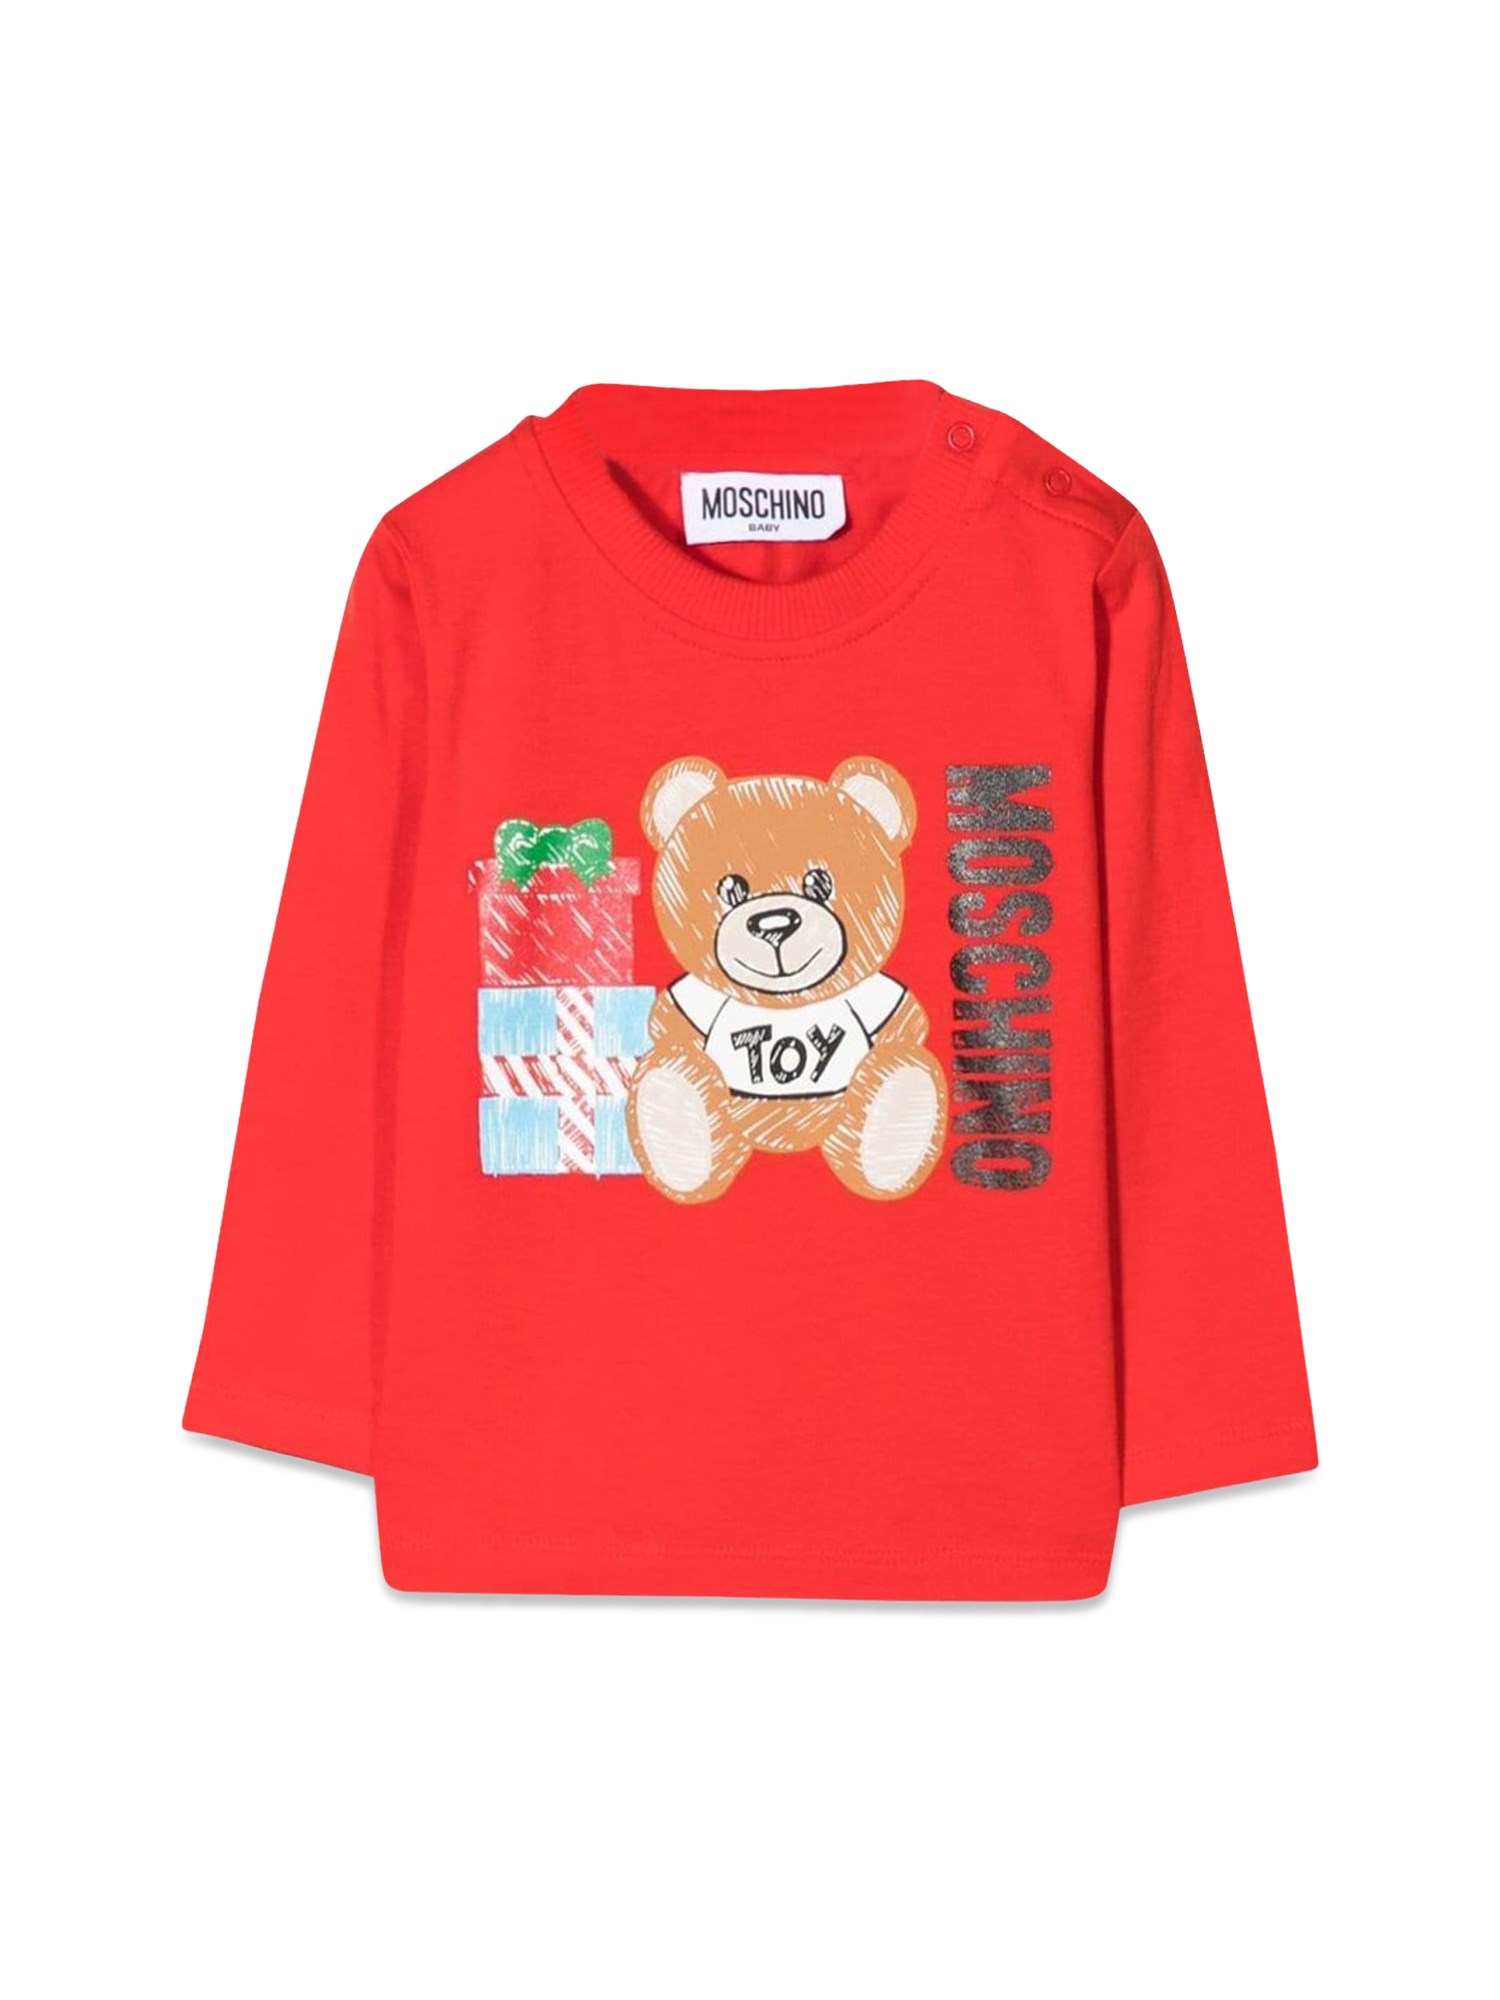 Moschino moschino t-shirt m/l teddy bear gifts